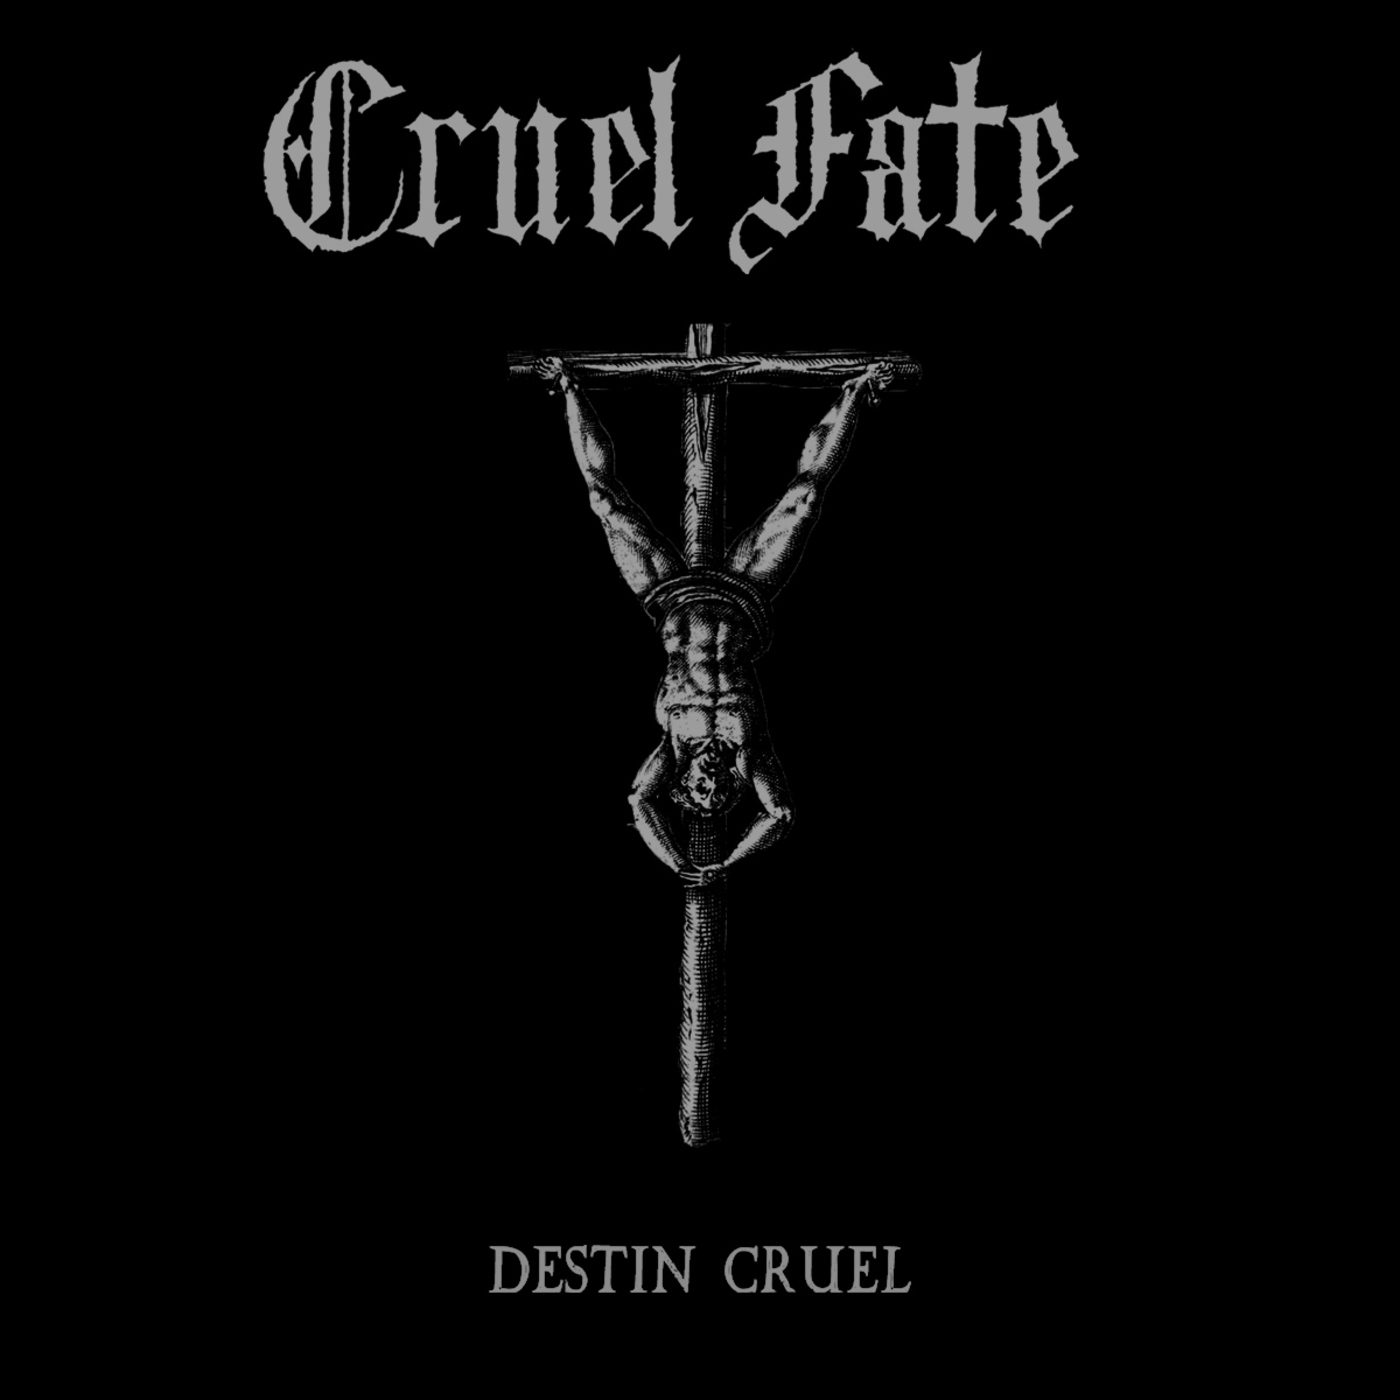 Cruel Fate - Destin Cruel - Personal Records